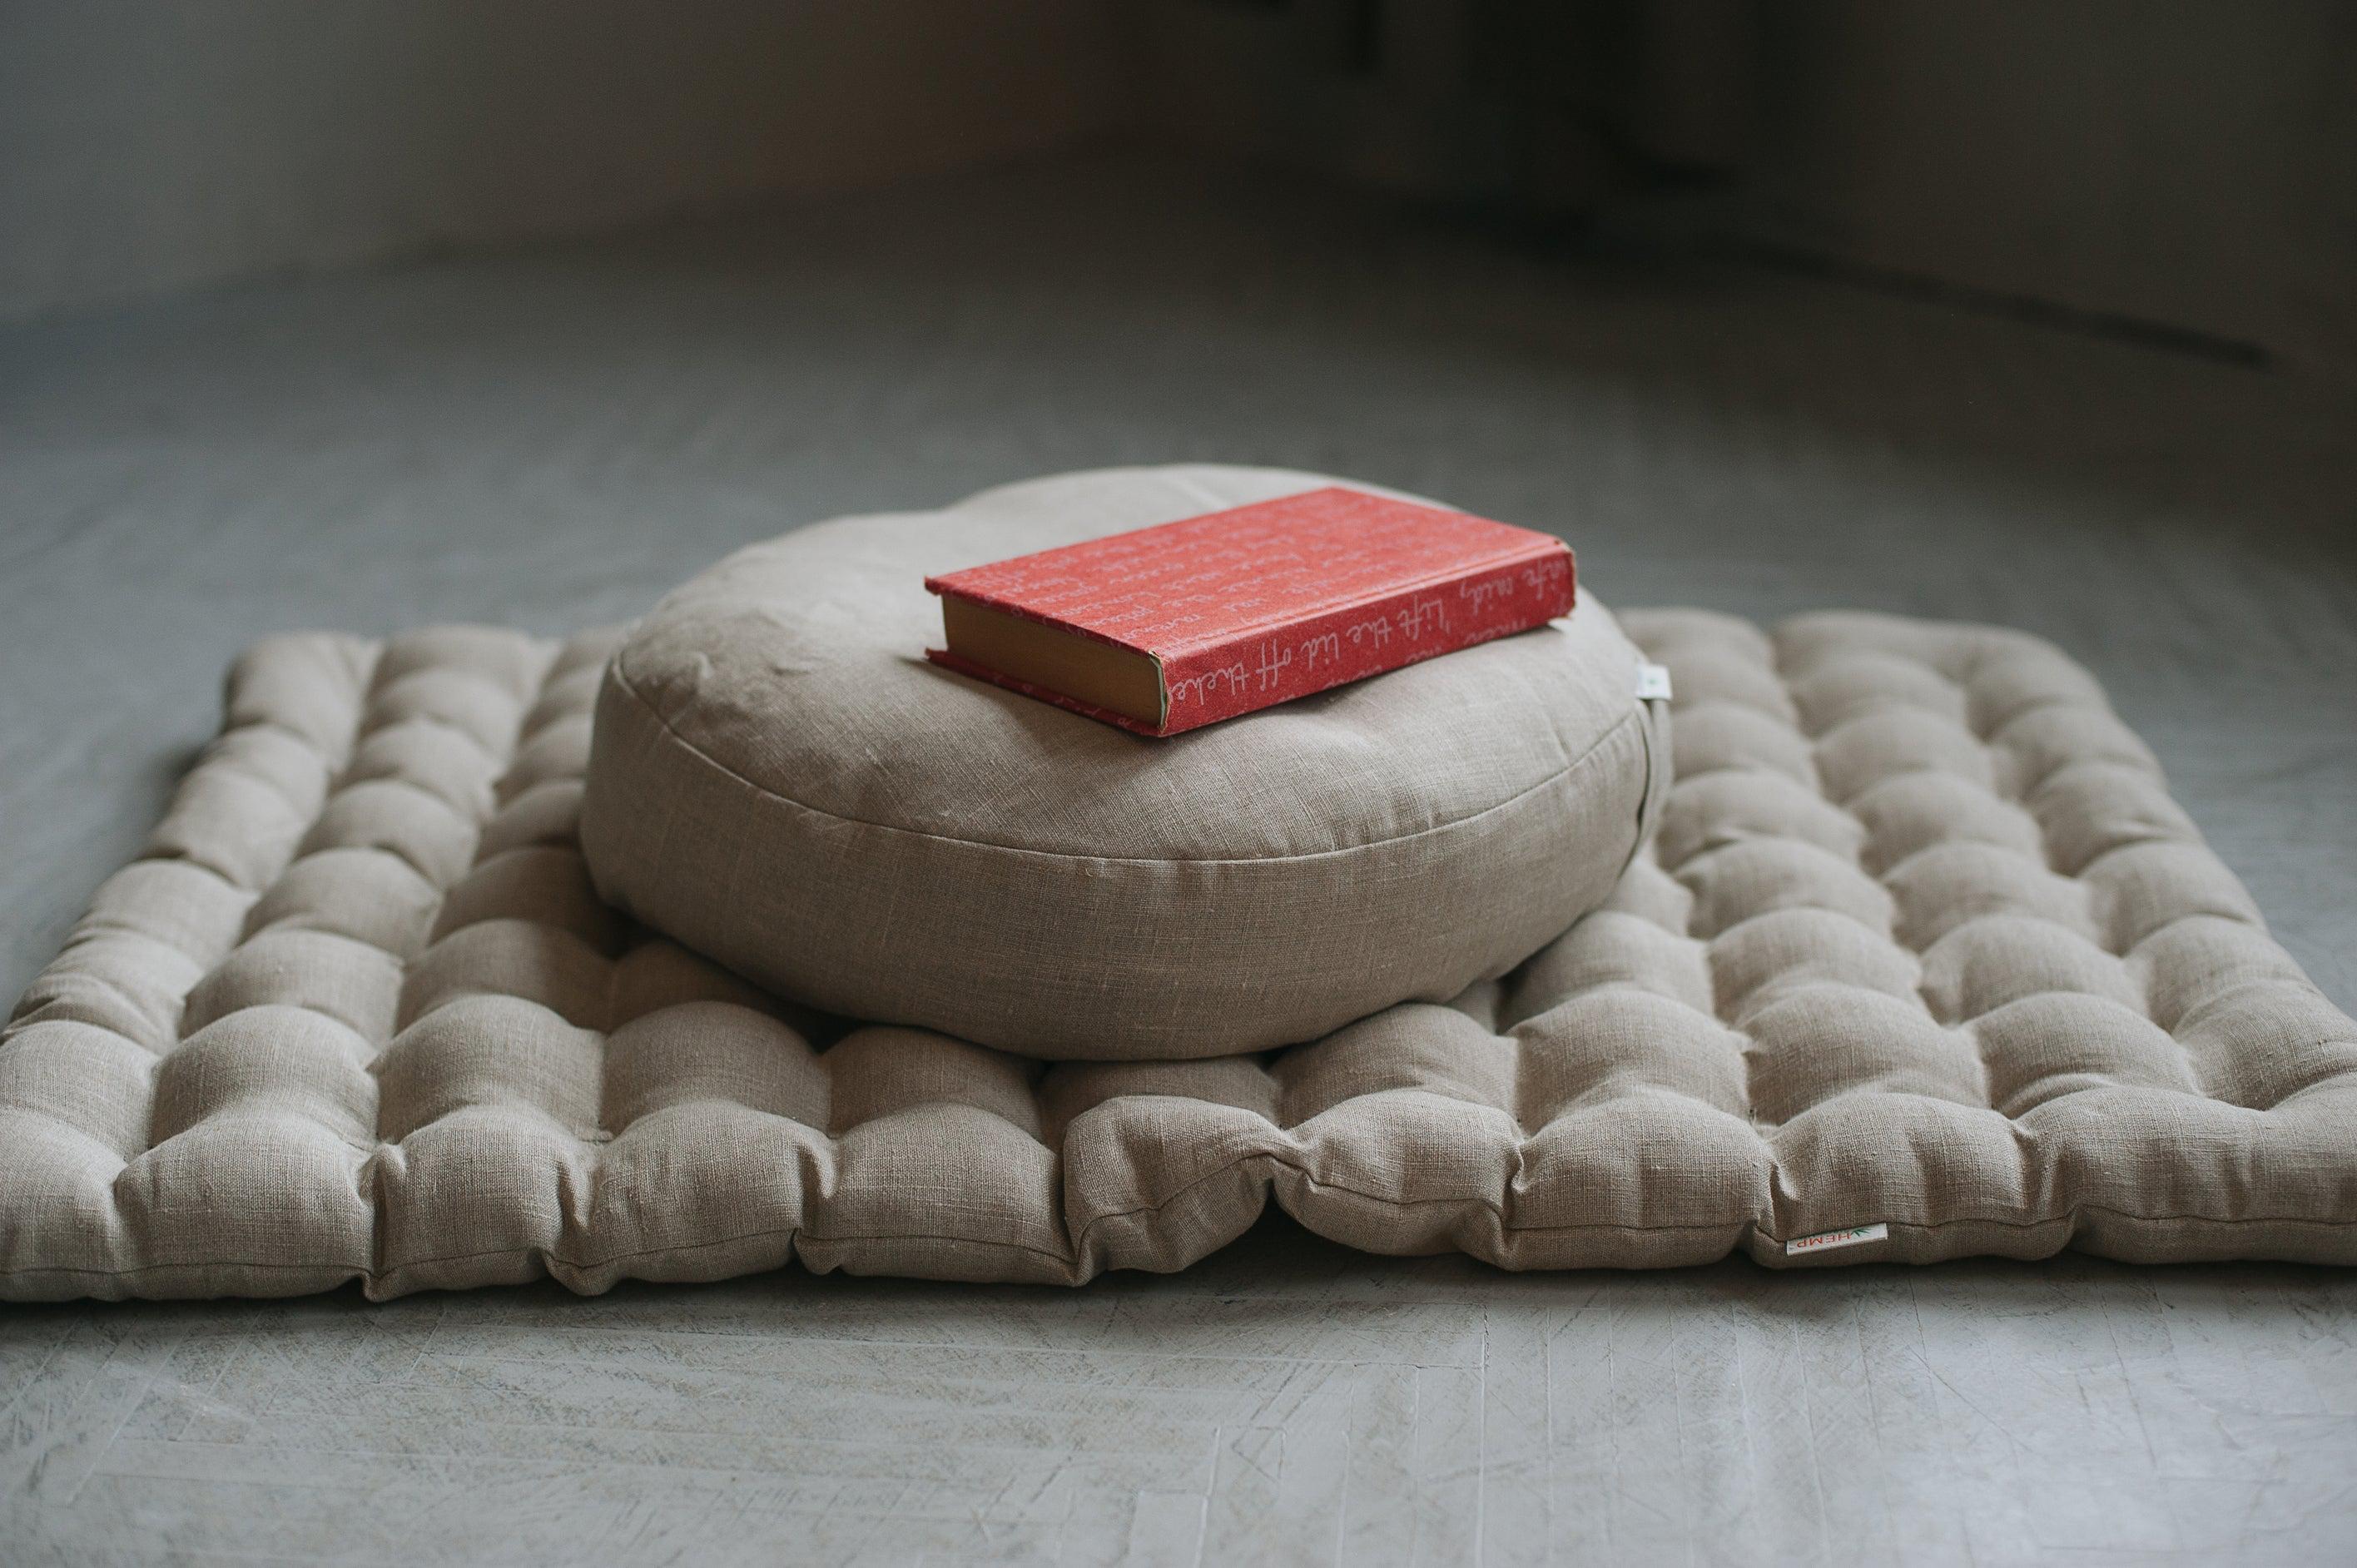 Buy Organic Cotton Round Zafu Cushion, Meditation Cushions